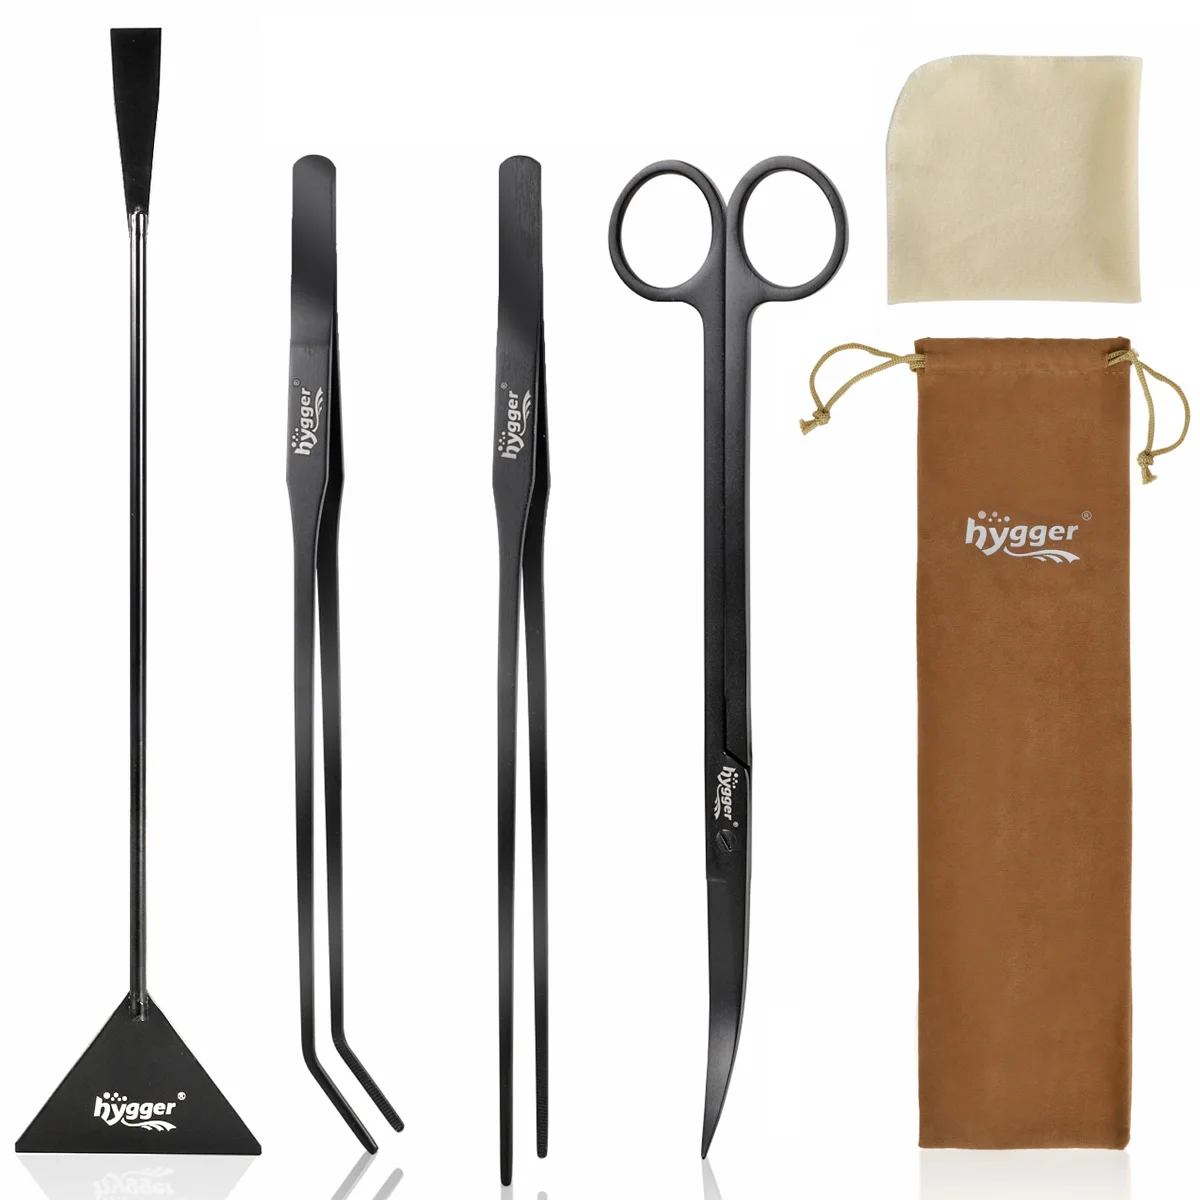 

Long Stainless Steel Premium Aquarium Tools 4 PCS Aquatic Plant Tweezers Scissors Spatula Kits Comes with 1 Cleaning Cloth, Black